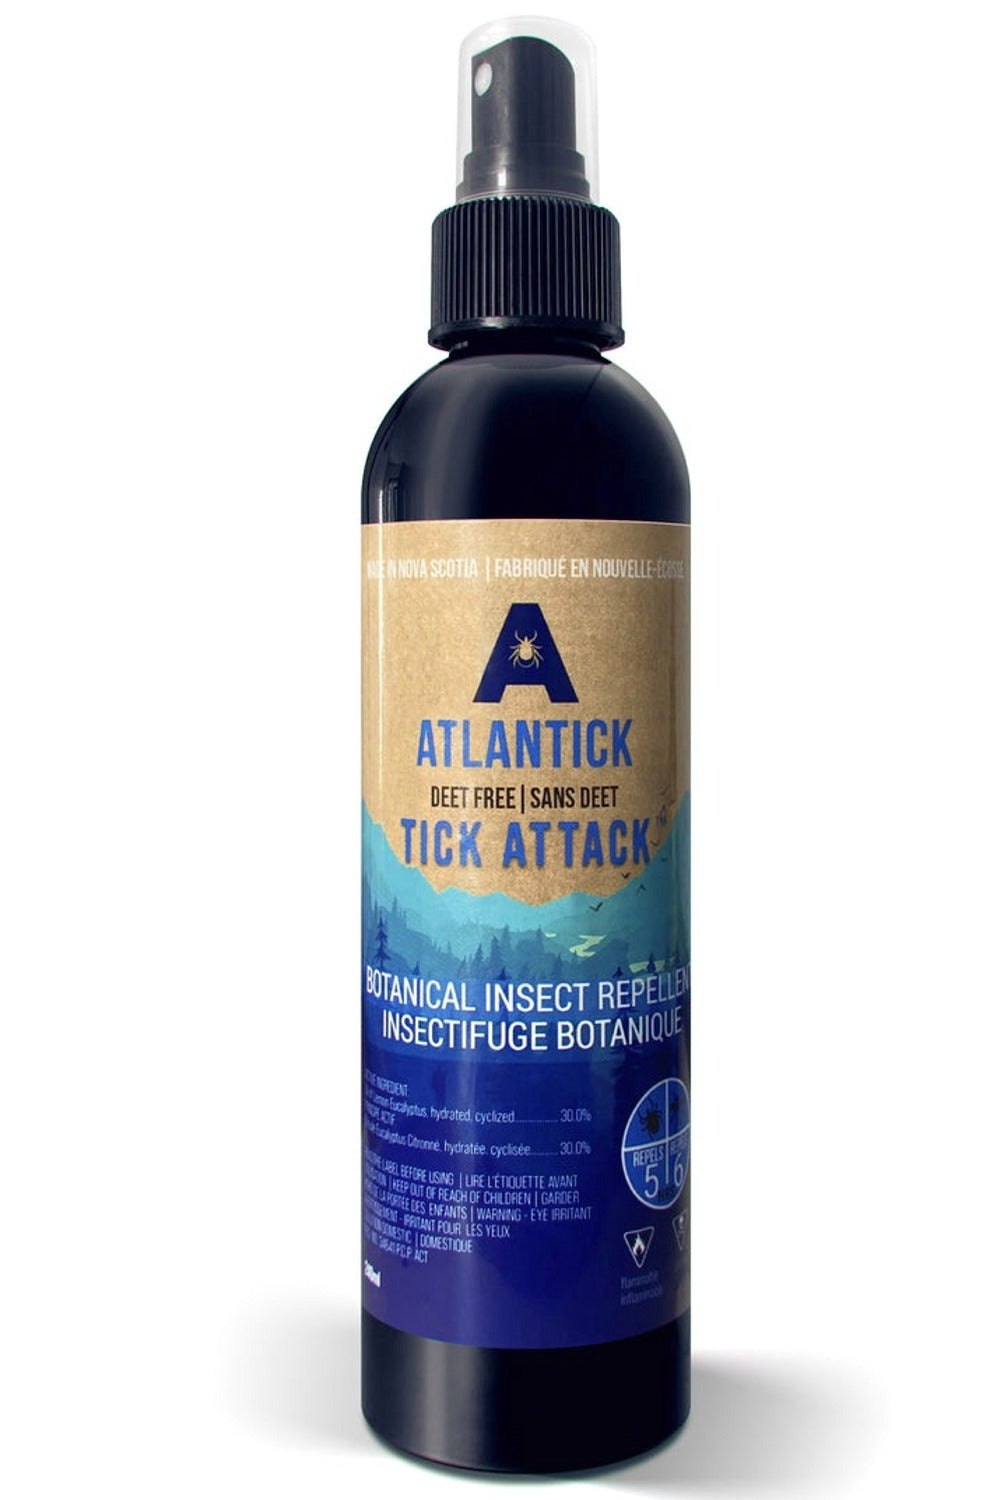 ATLANTICK TickAttack Botanical Insect Repel (240 ml)